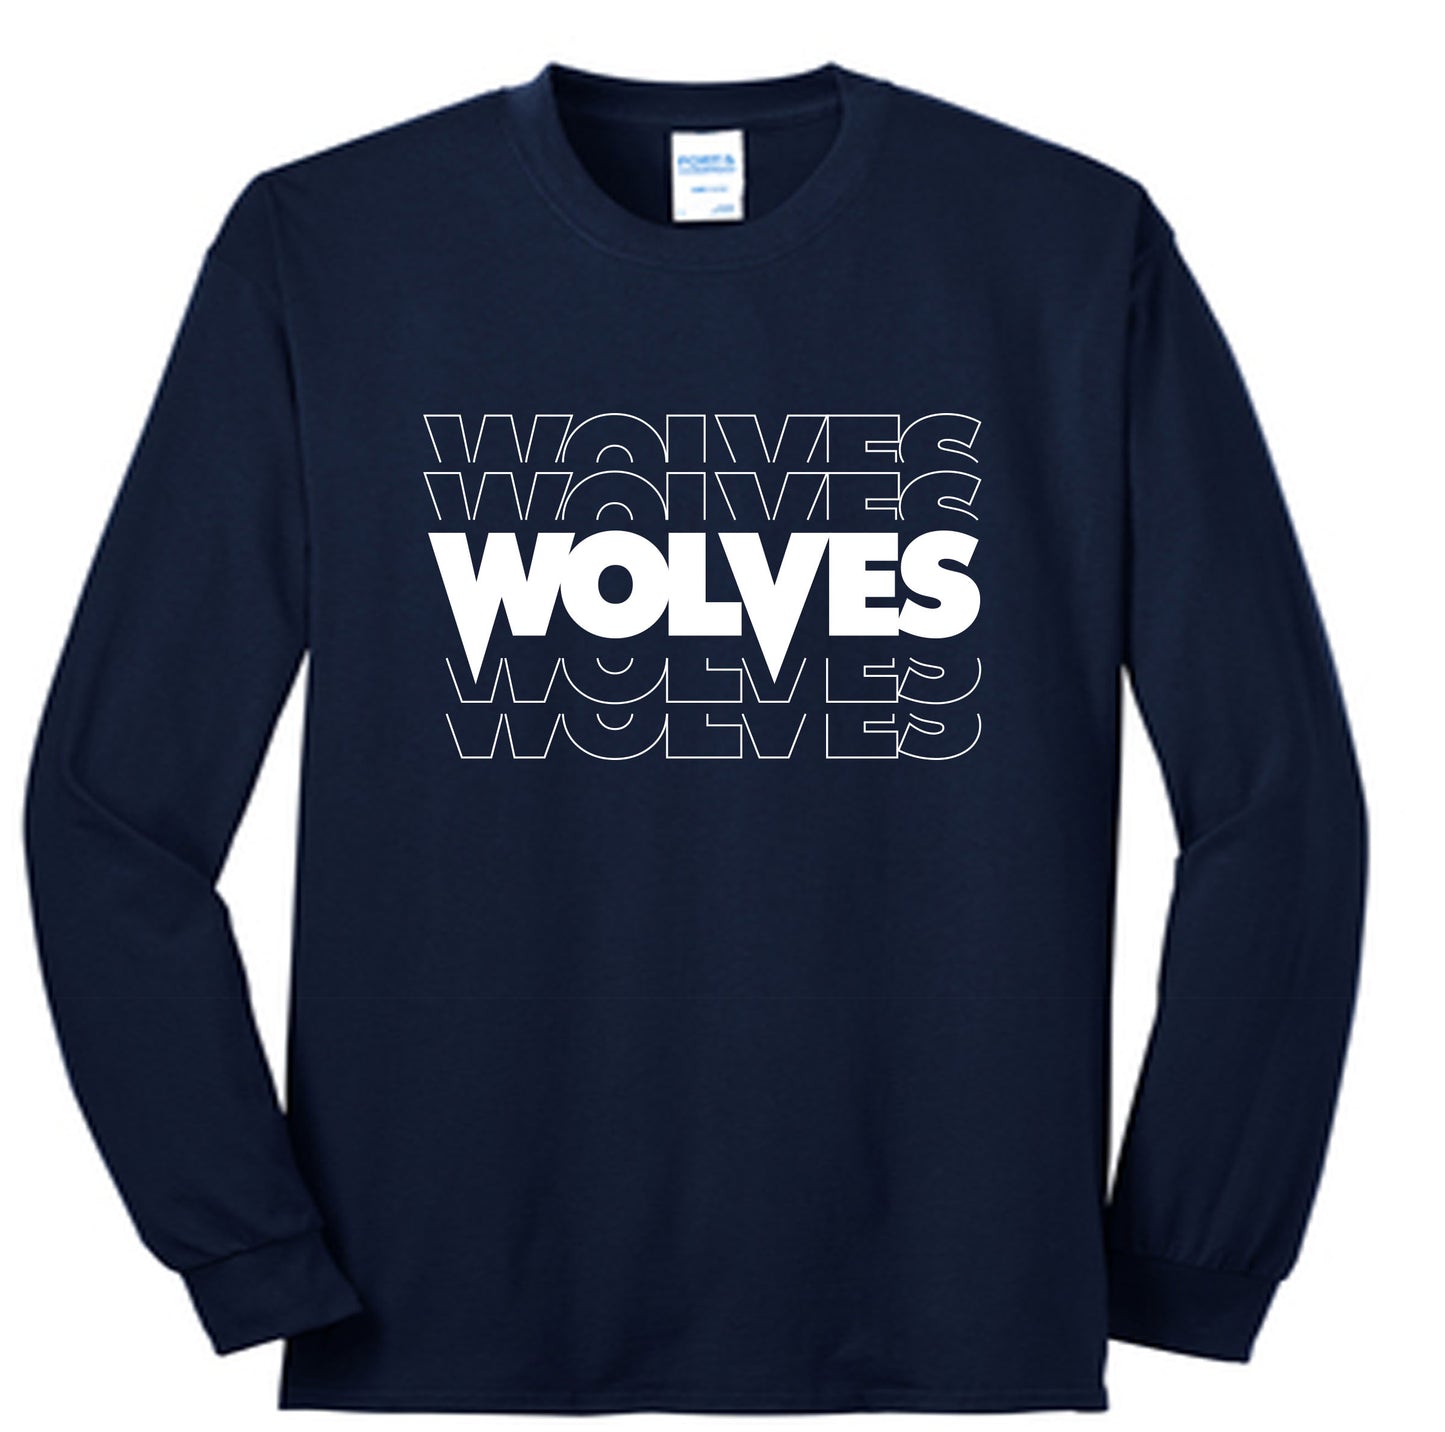 Wolves ECHO Design